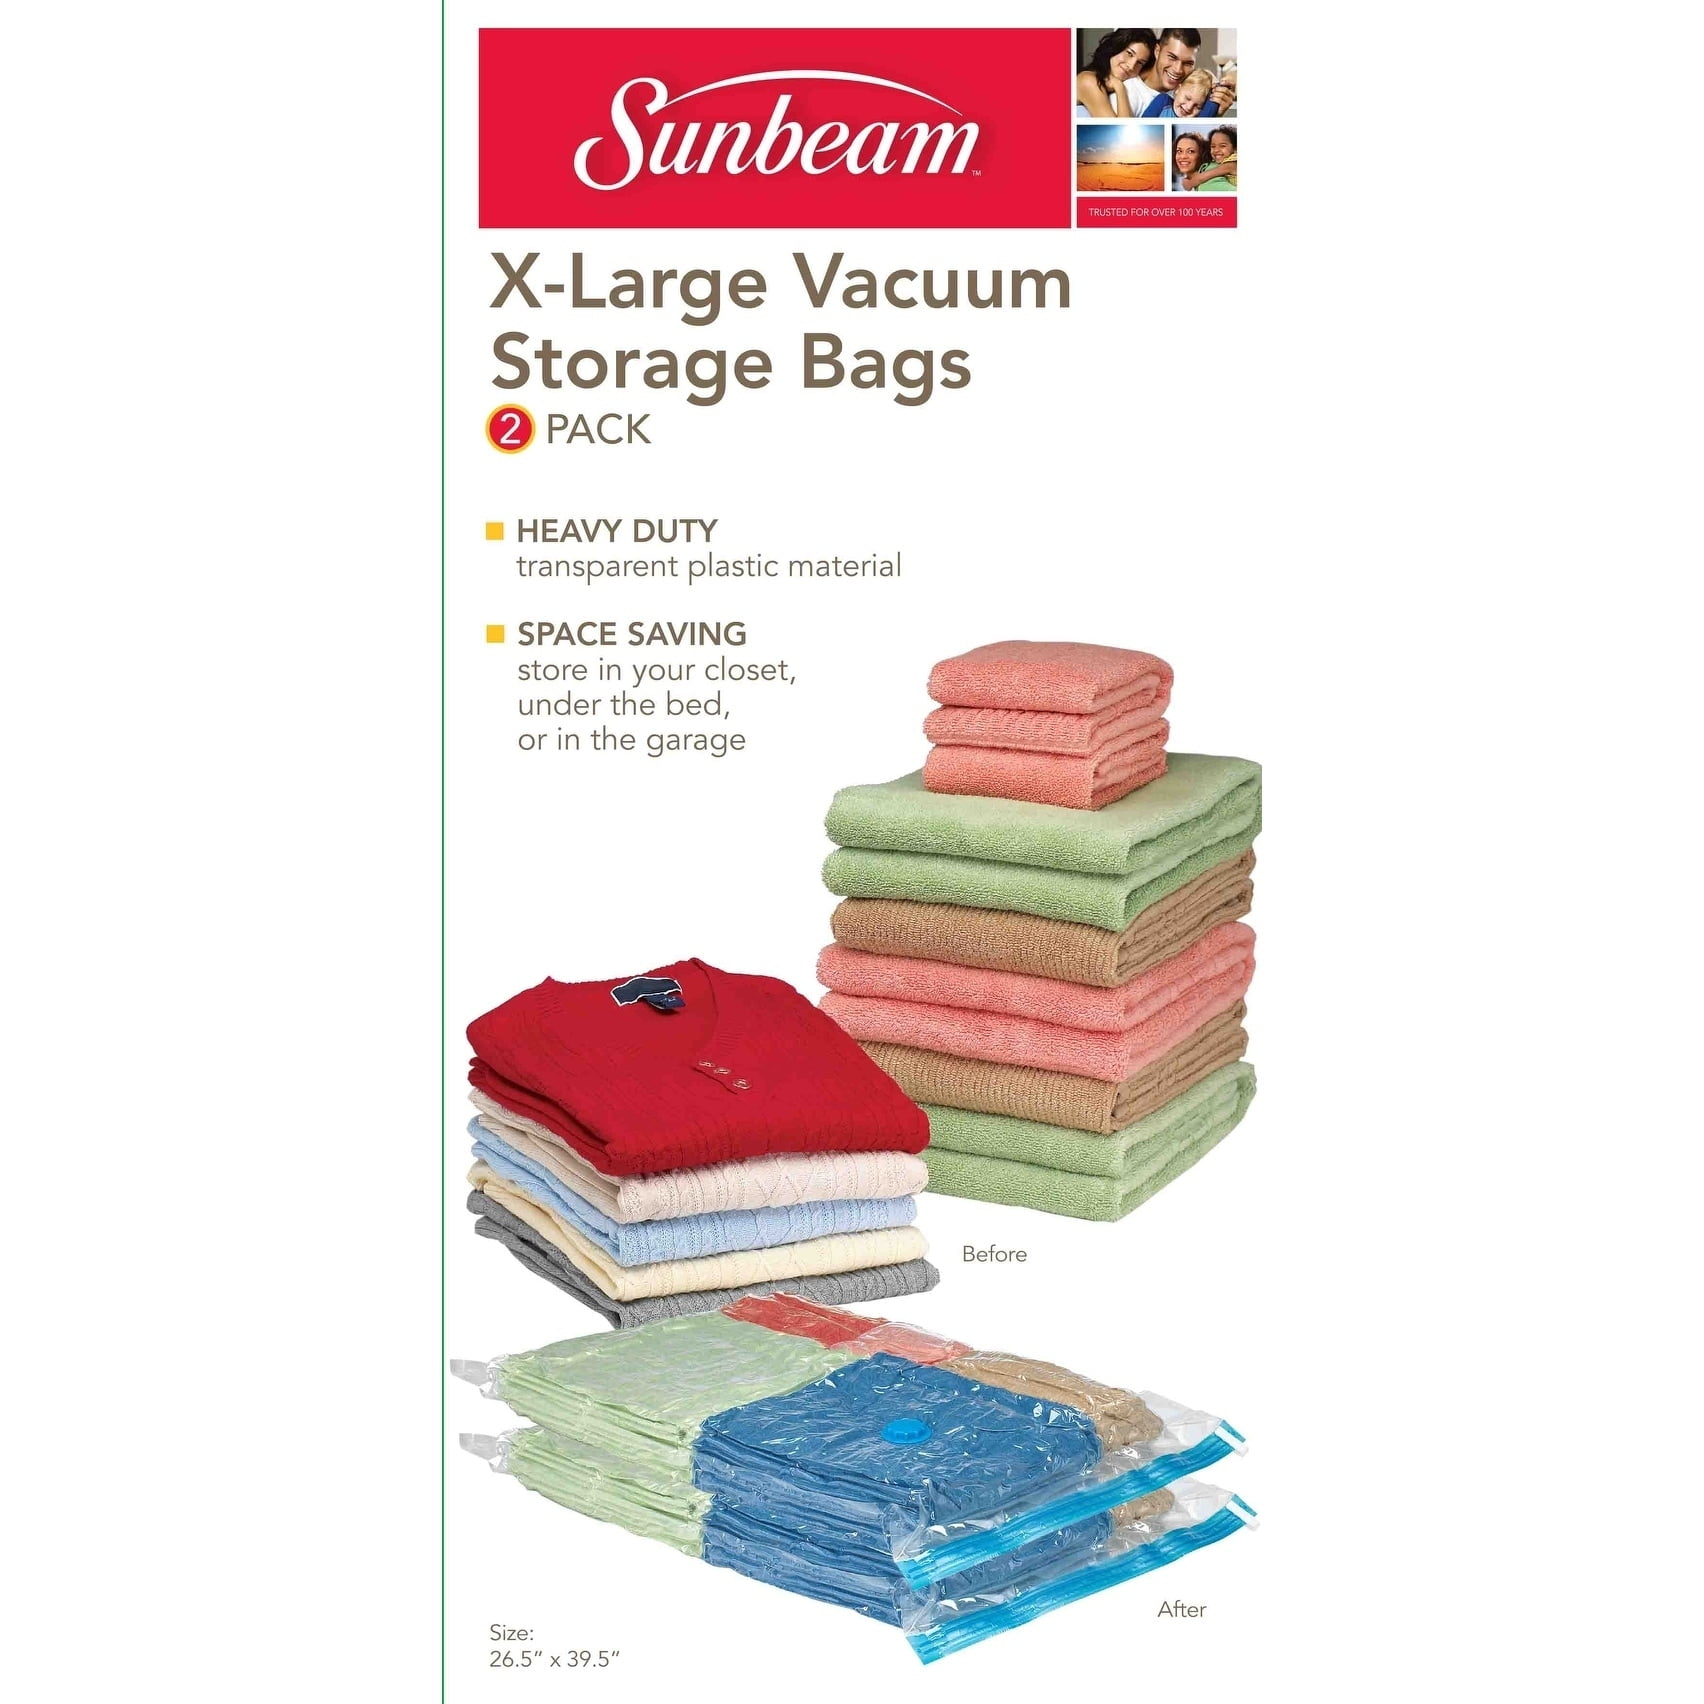 Sunbeam Large Vacuum Storage Bag, 3-Pack